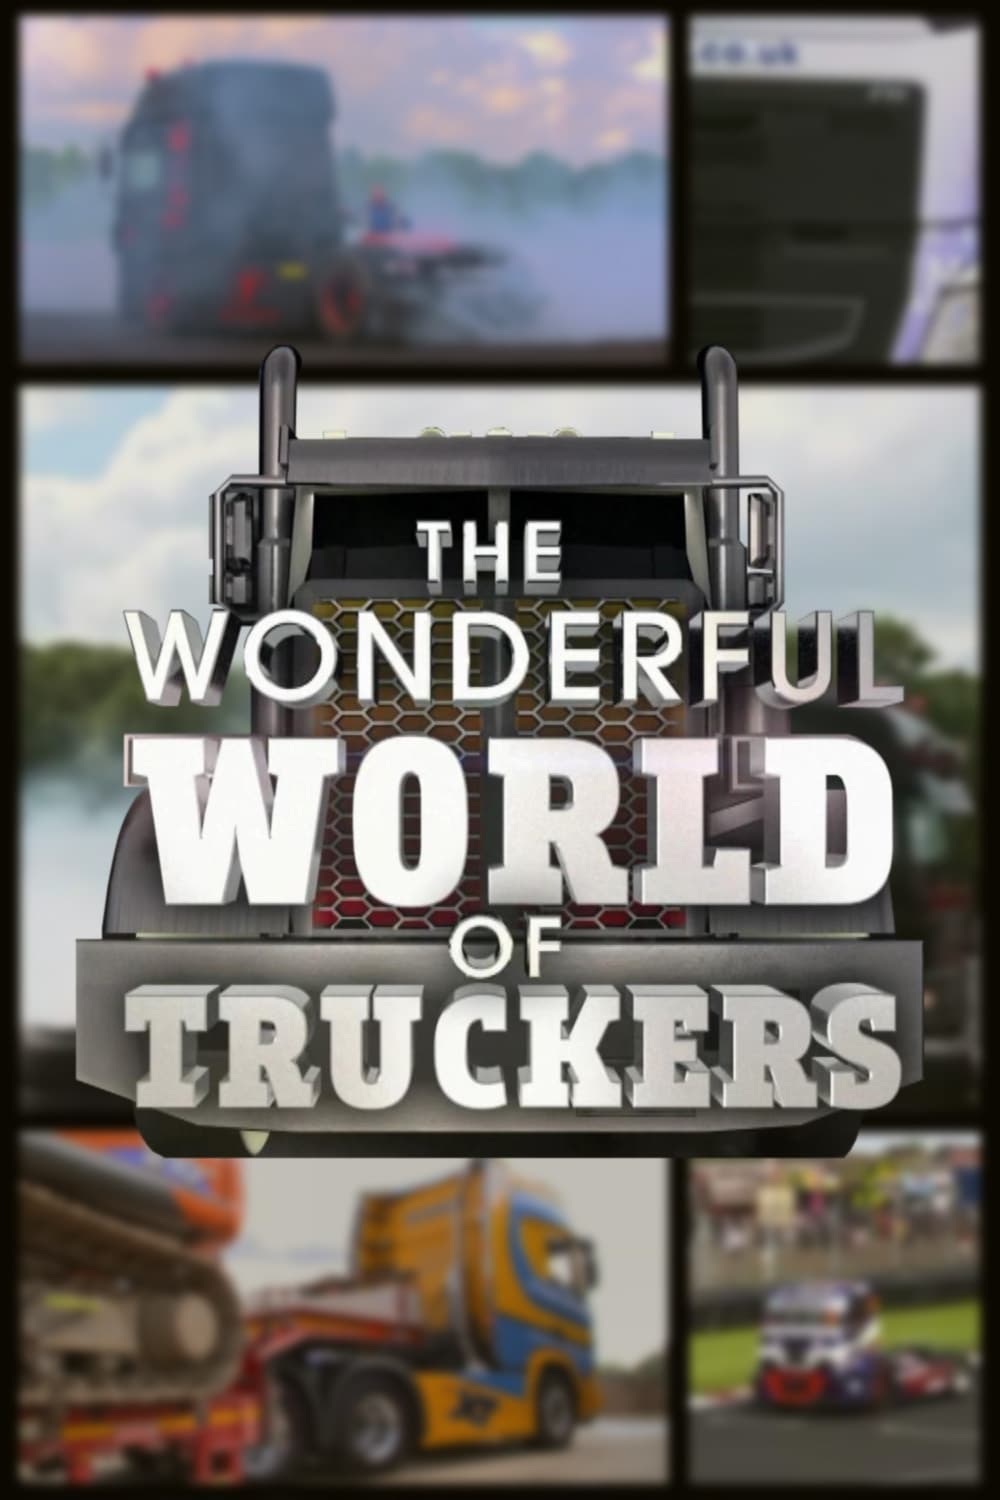 Wonderful World of Trucking